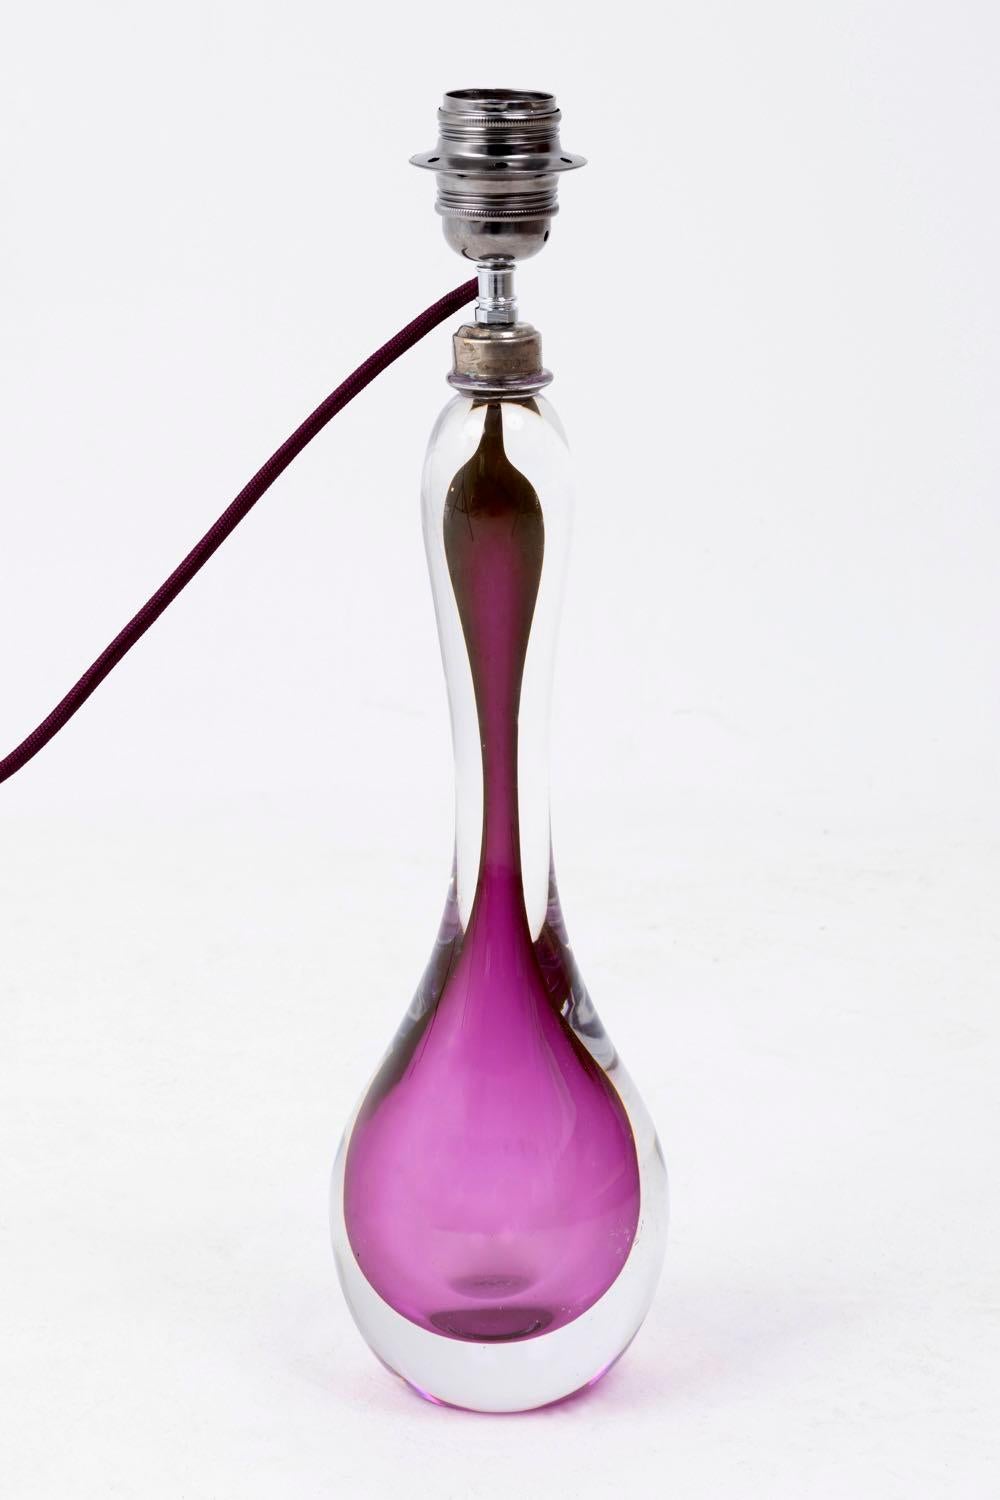 Val-Saint-Lambert, Lampe aus transparentem und lila geformtem Kristall, 1960er Jahre (Moderne) im Angebot